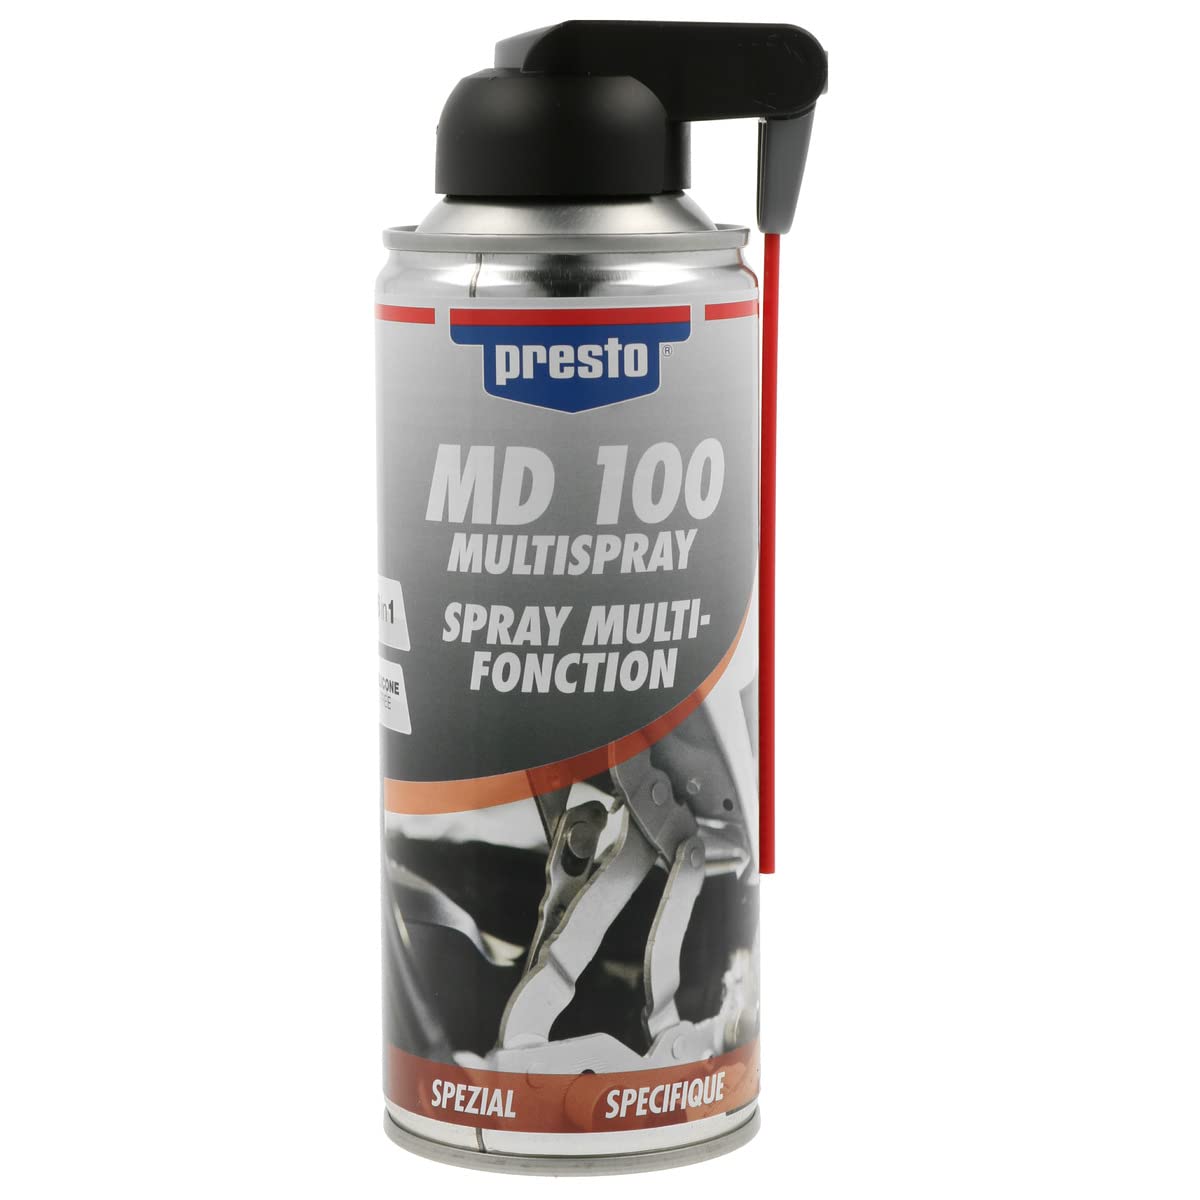 presto 157165 MD 100 Multispray 400 ml von Presto